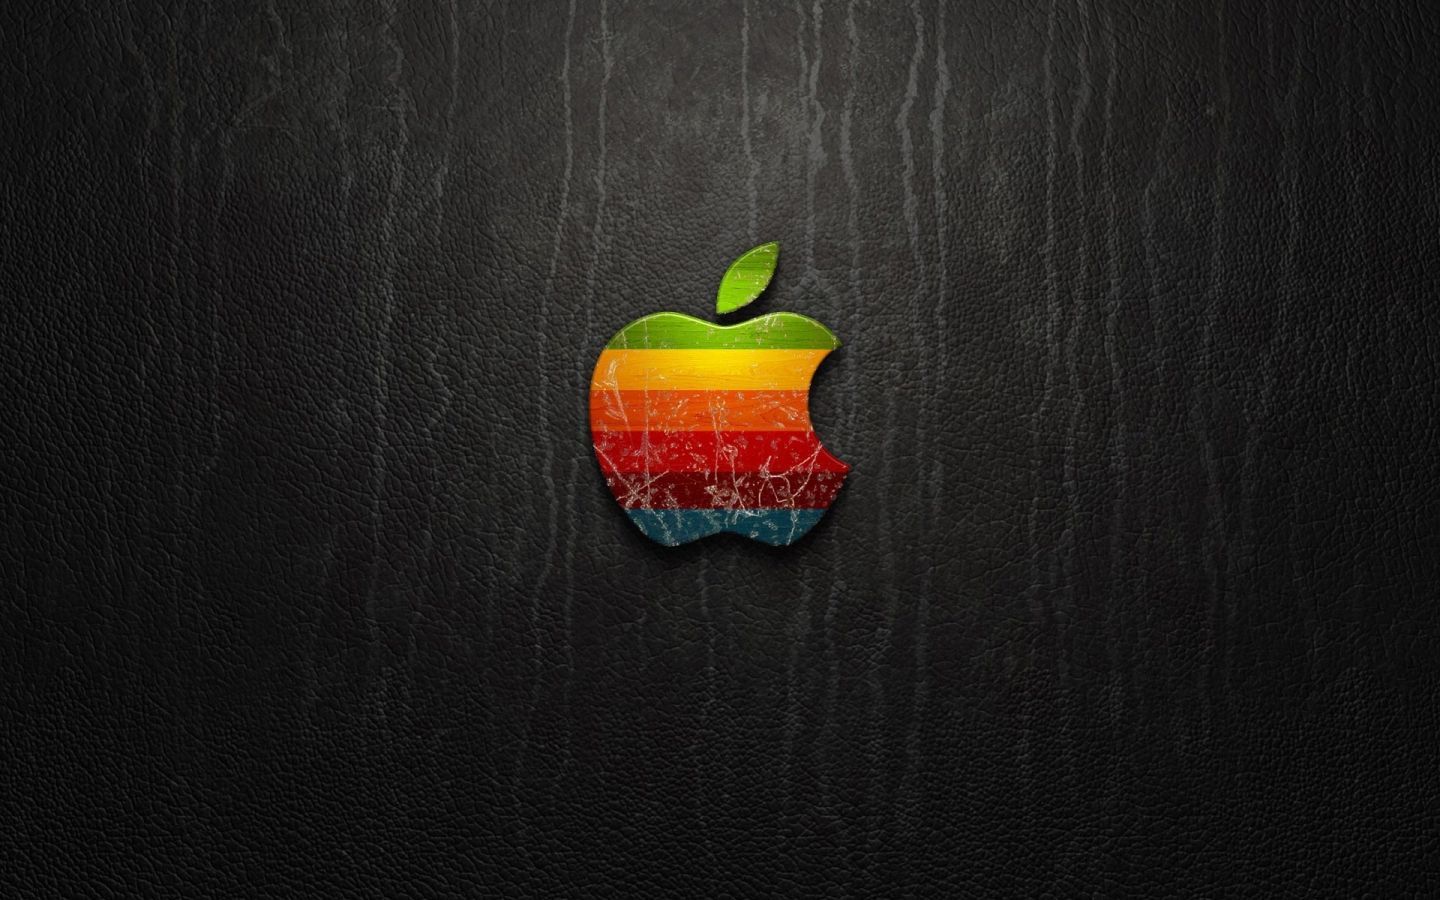 Desktop Backgrounds Puters Apple Mac Leather Imac - 1440x900 ...